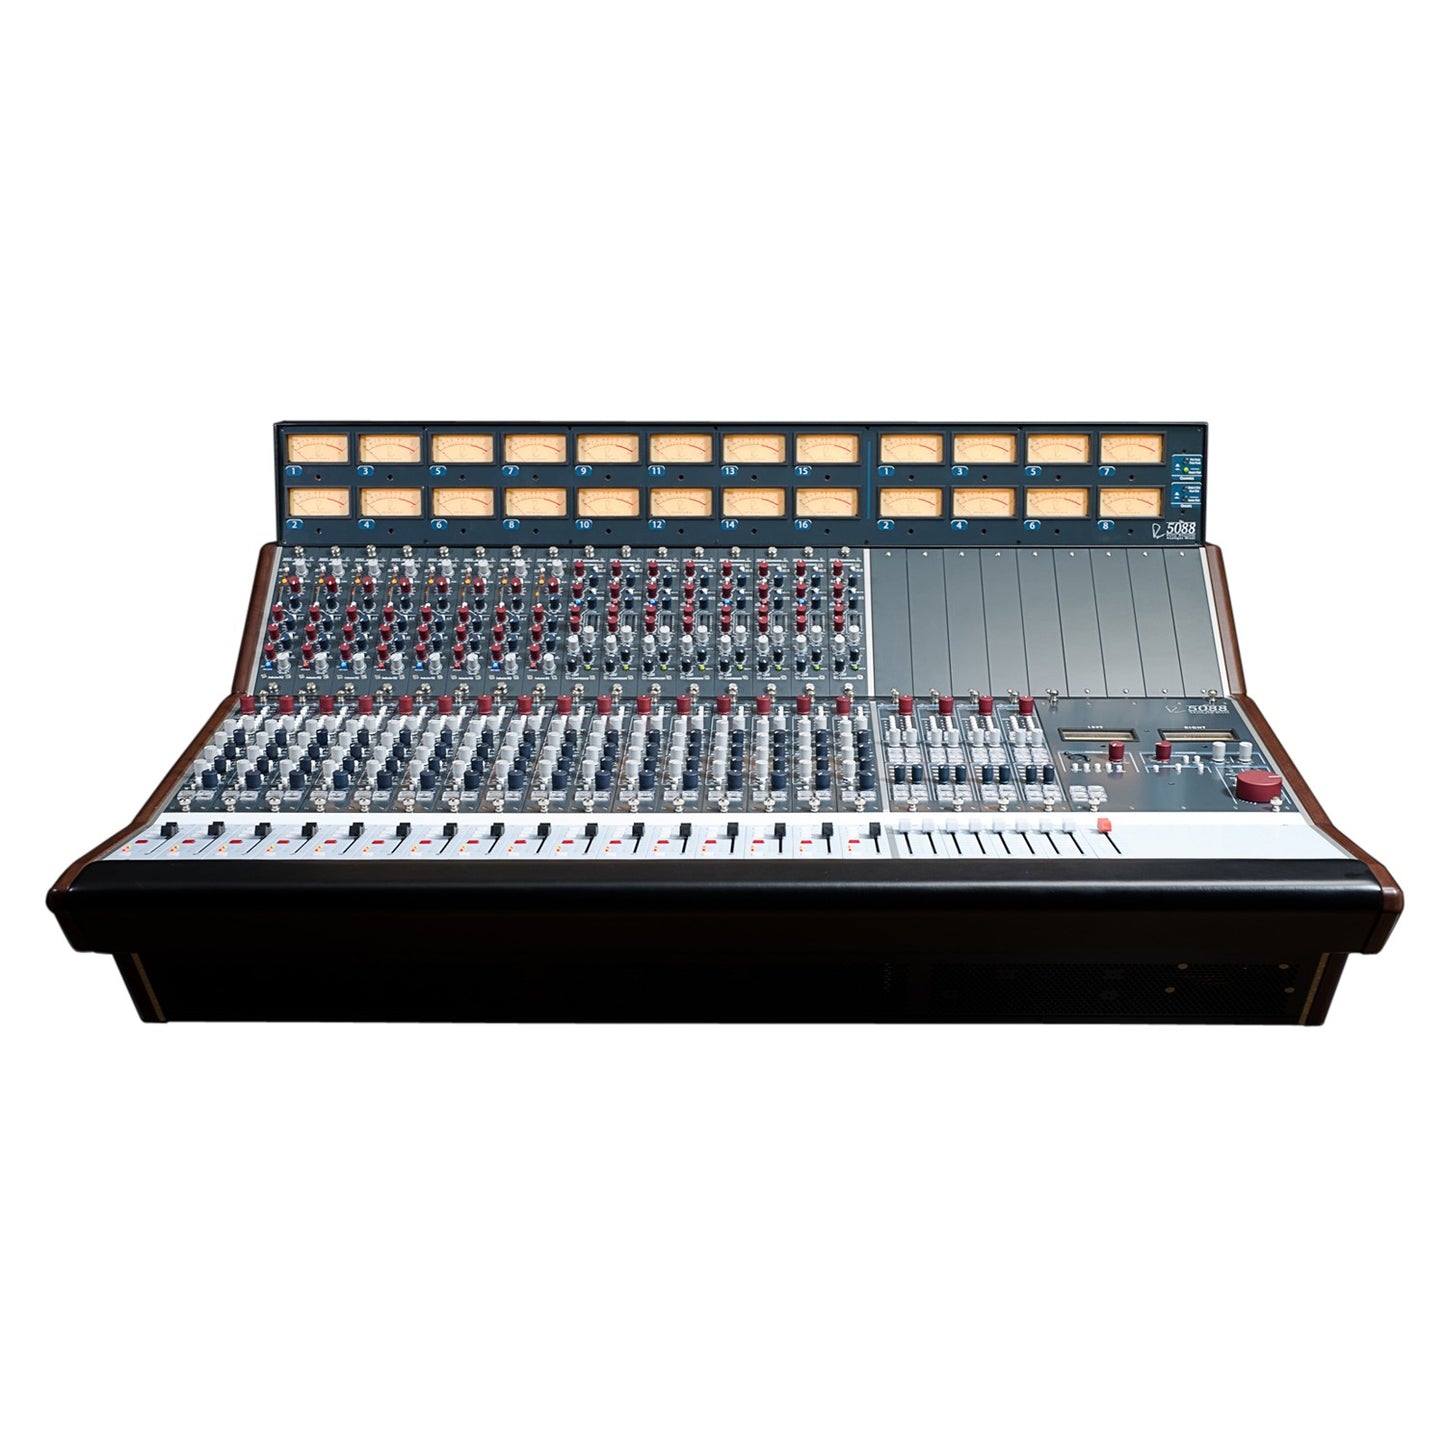 Rupert Neve Designs 5088 Analog Recording Console